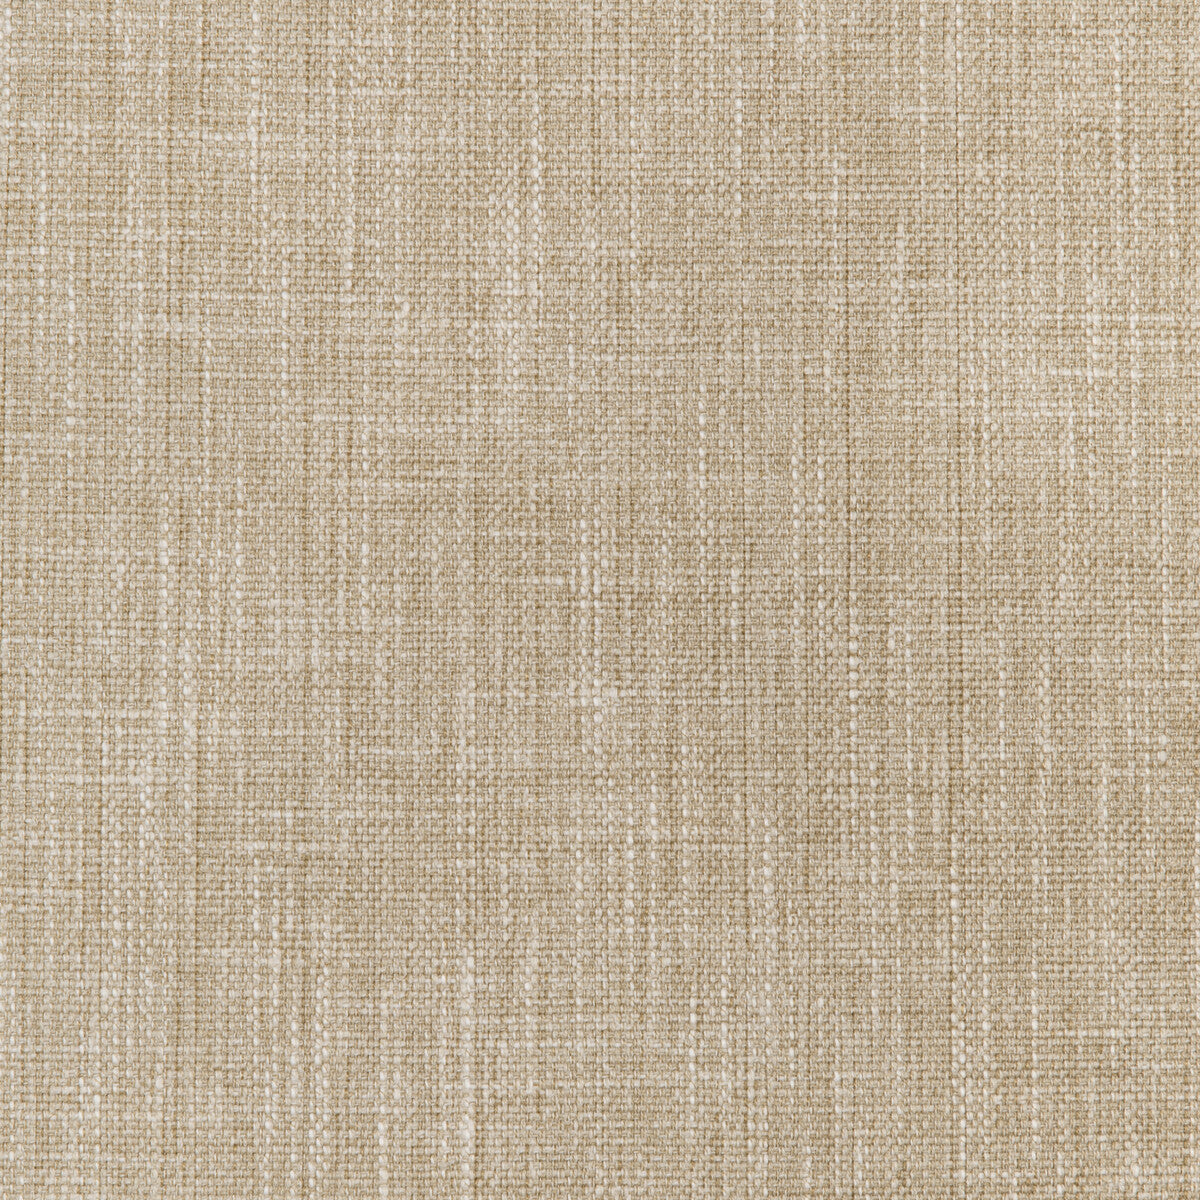 Kravet Smart fabric in 37065-16 color - pattern 37065.16.0 - by Kravet Smart